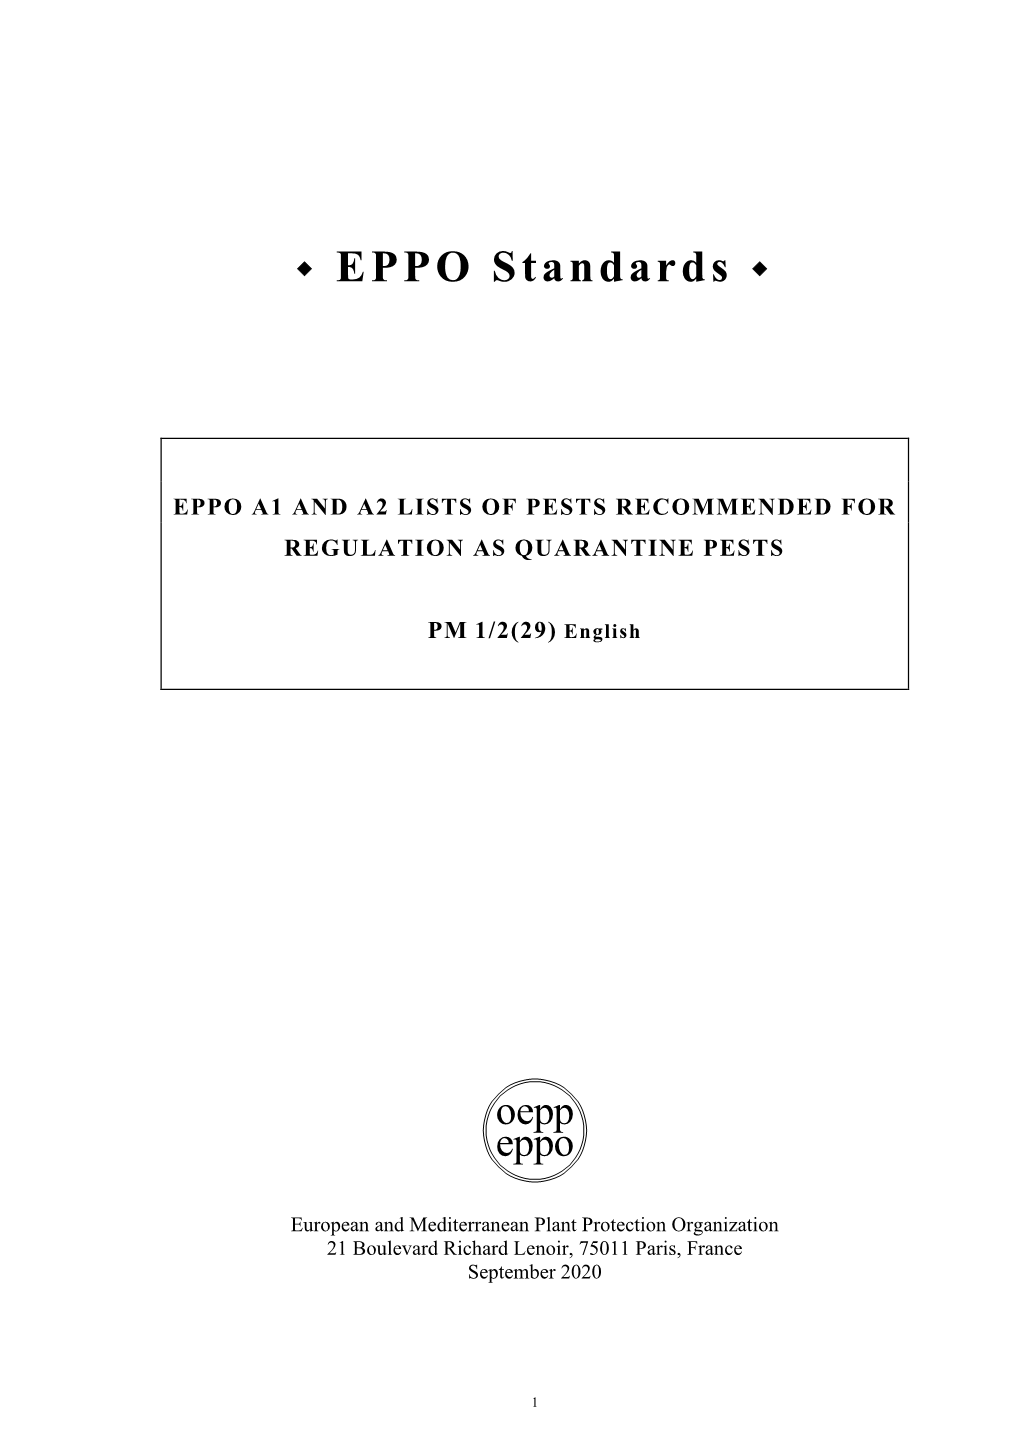 EPPO Standard PM 1/2(8)